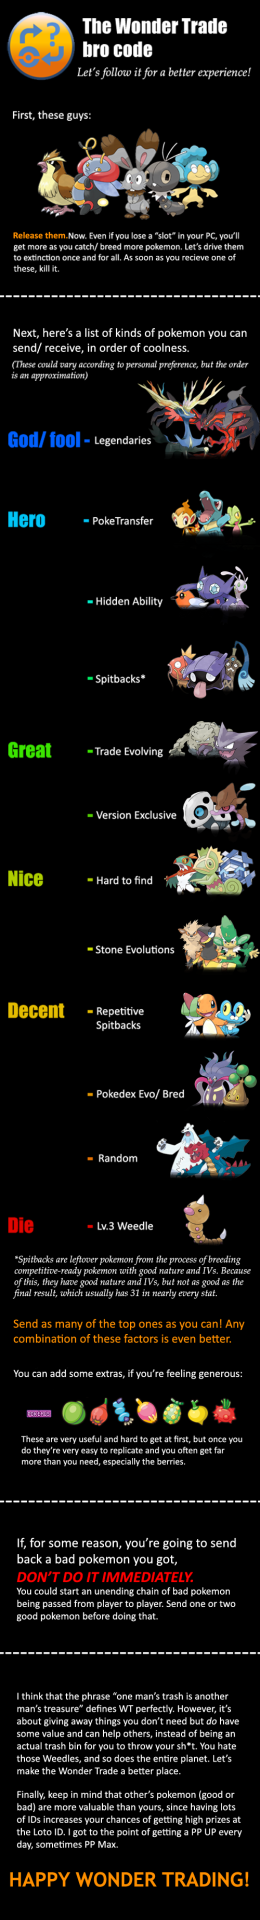 [3DS][Game] Pokemon X & Y - Pagina 8 Tumblr_n7ta48mwQ41trnhn2o1_1280